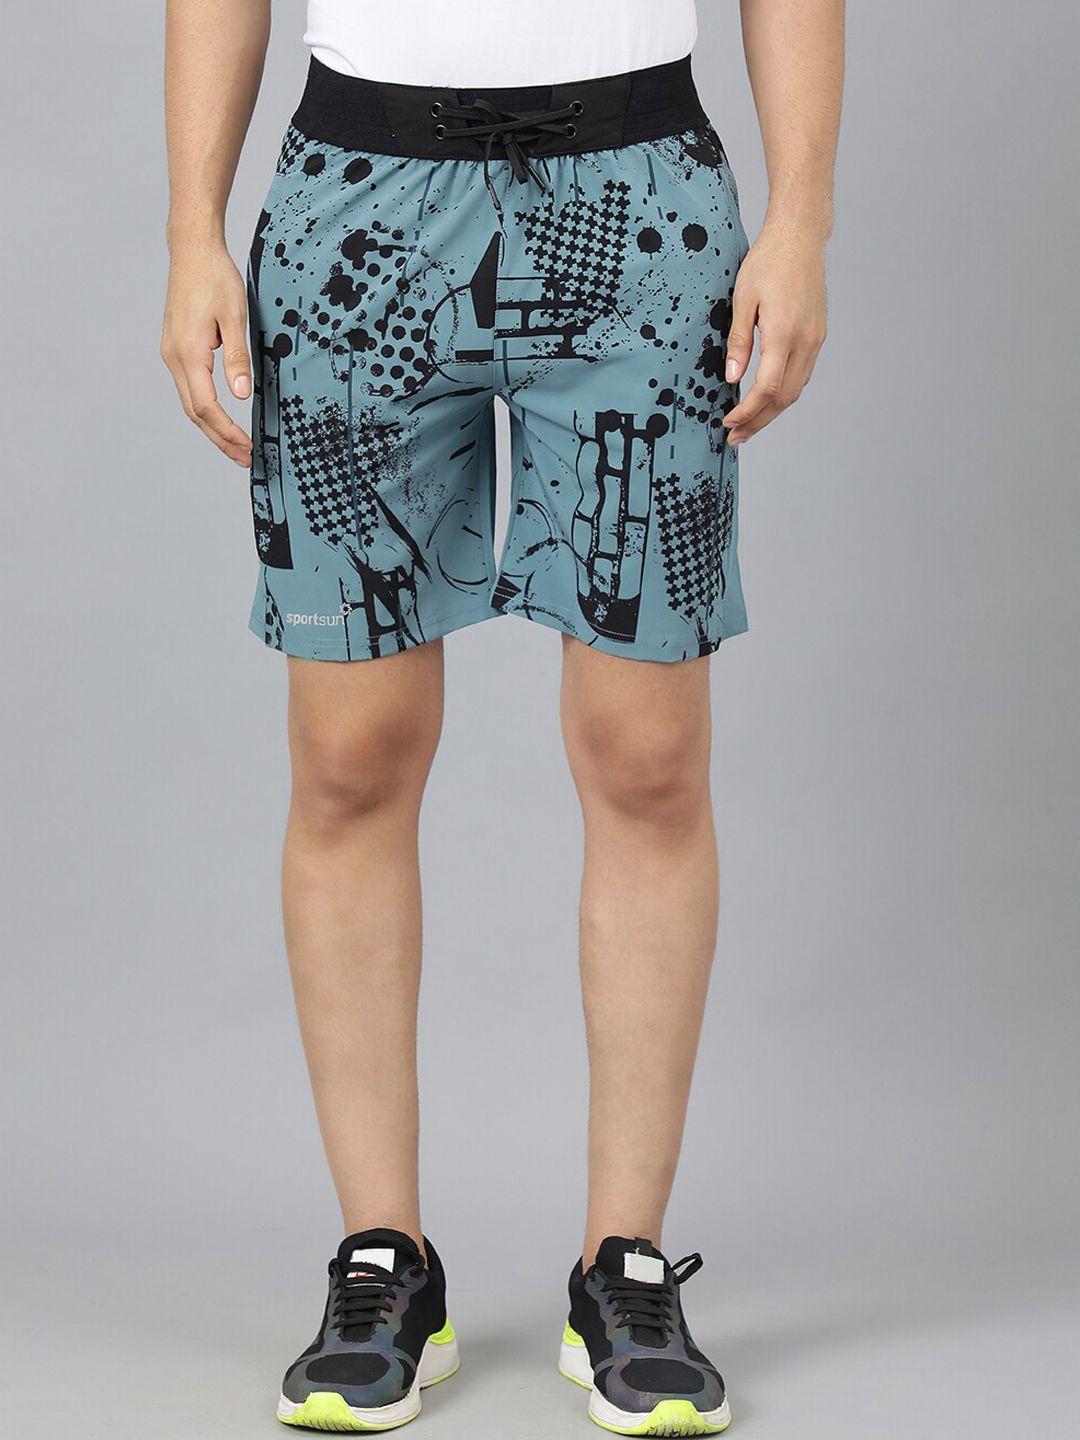 sport-sun-men-abstract-printed-sports-shorts